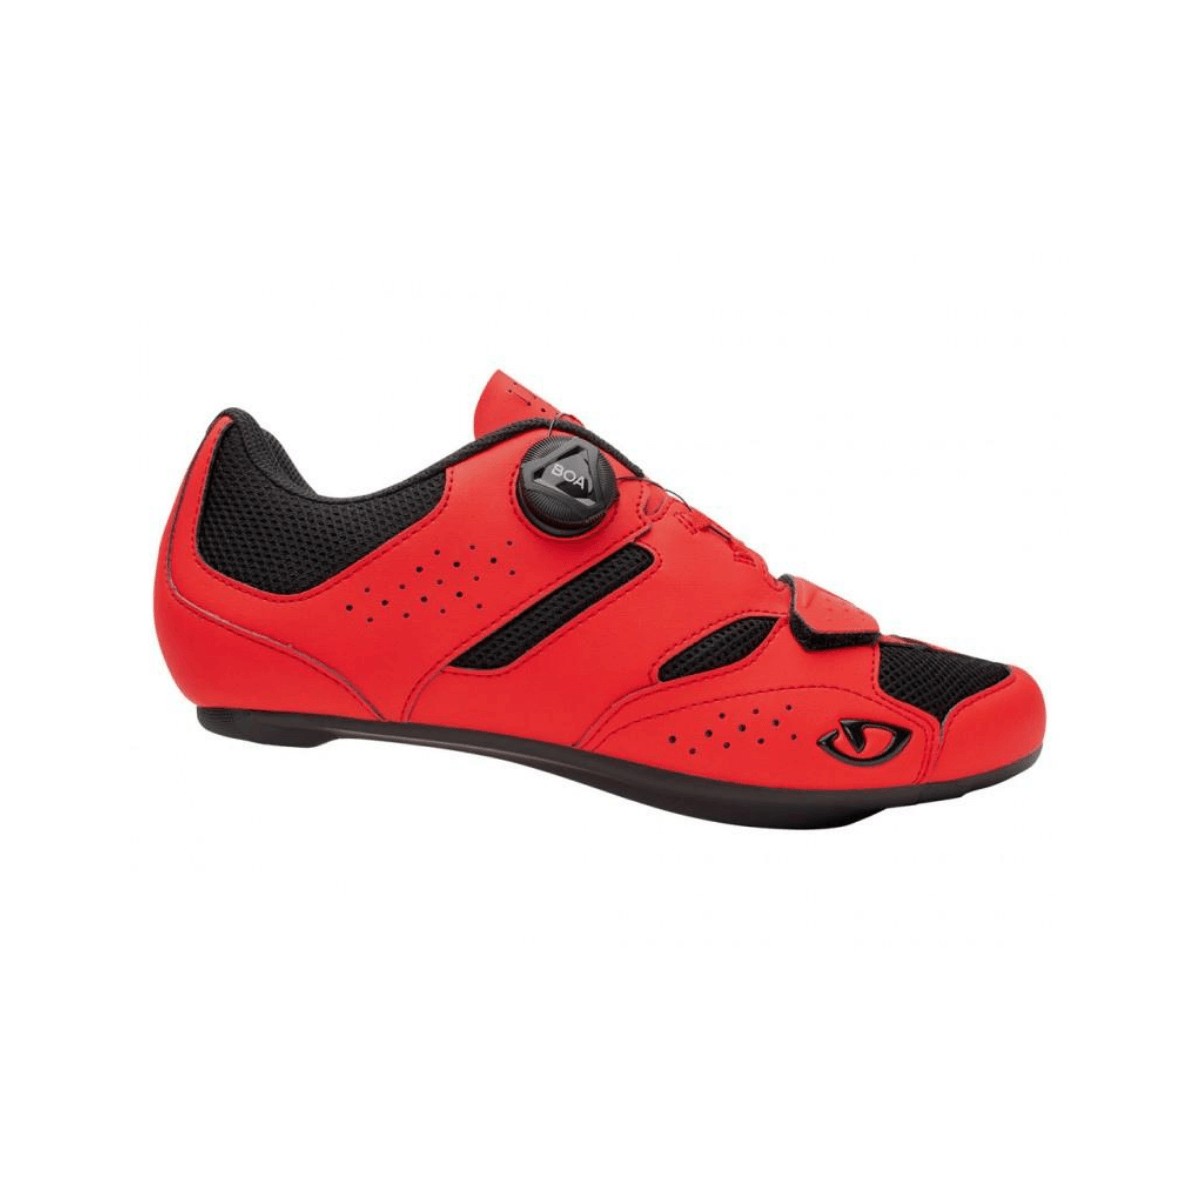 Chaussures Giro Savix II Rouge Noir, Taille 44 - EUR